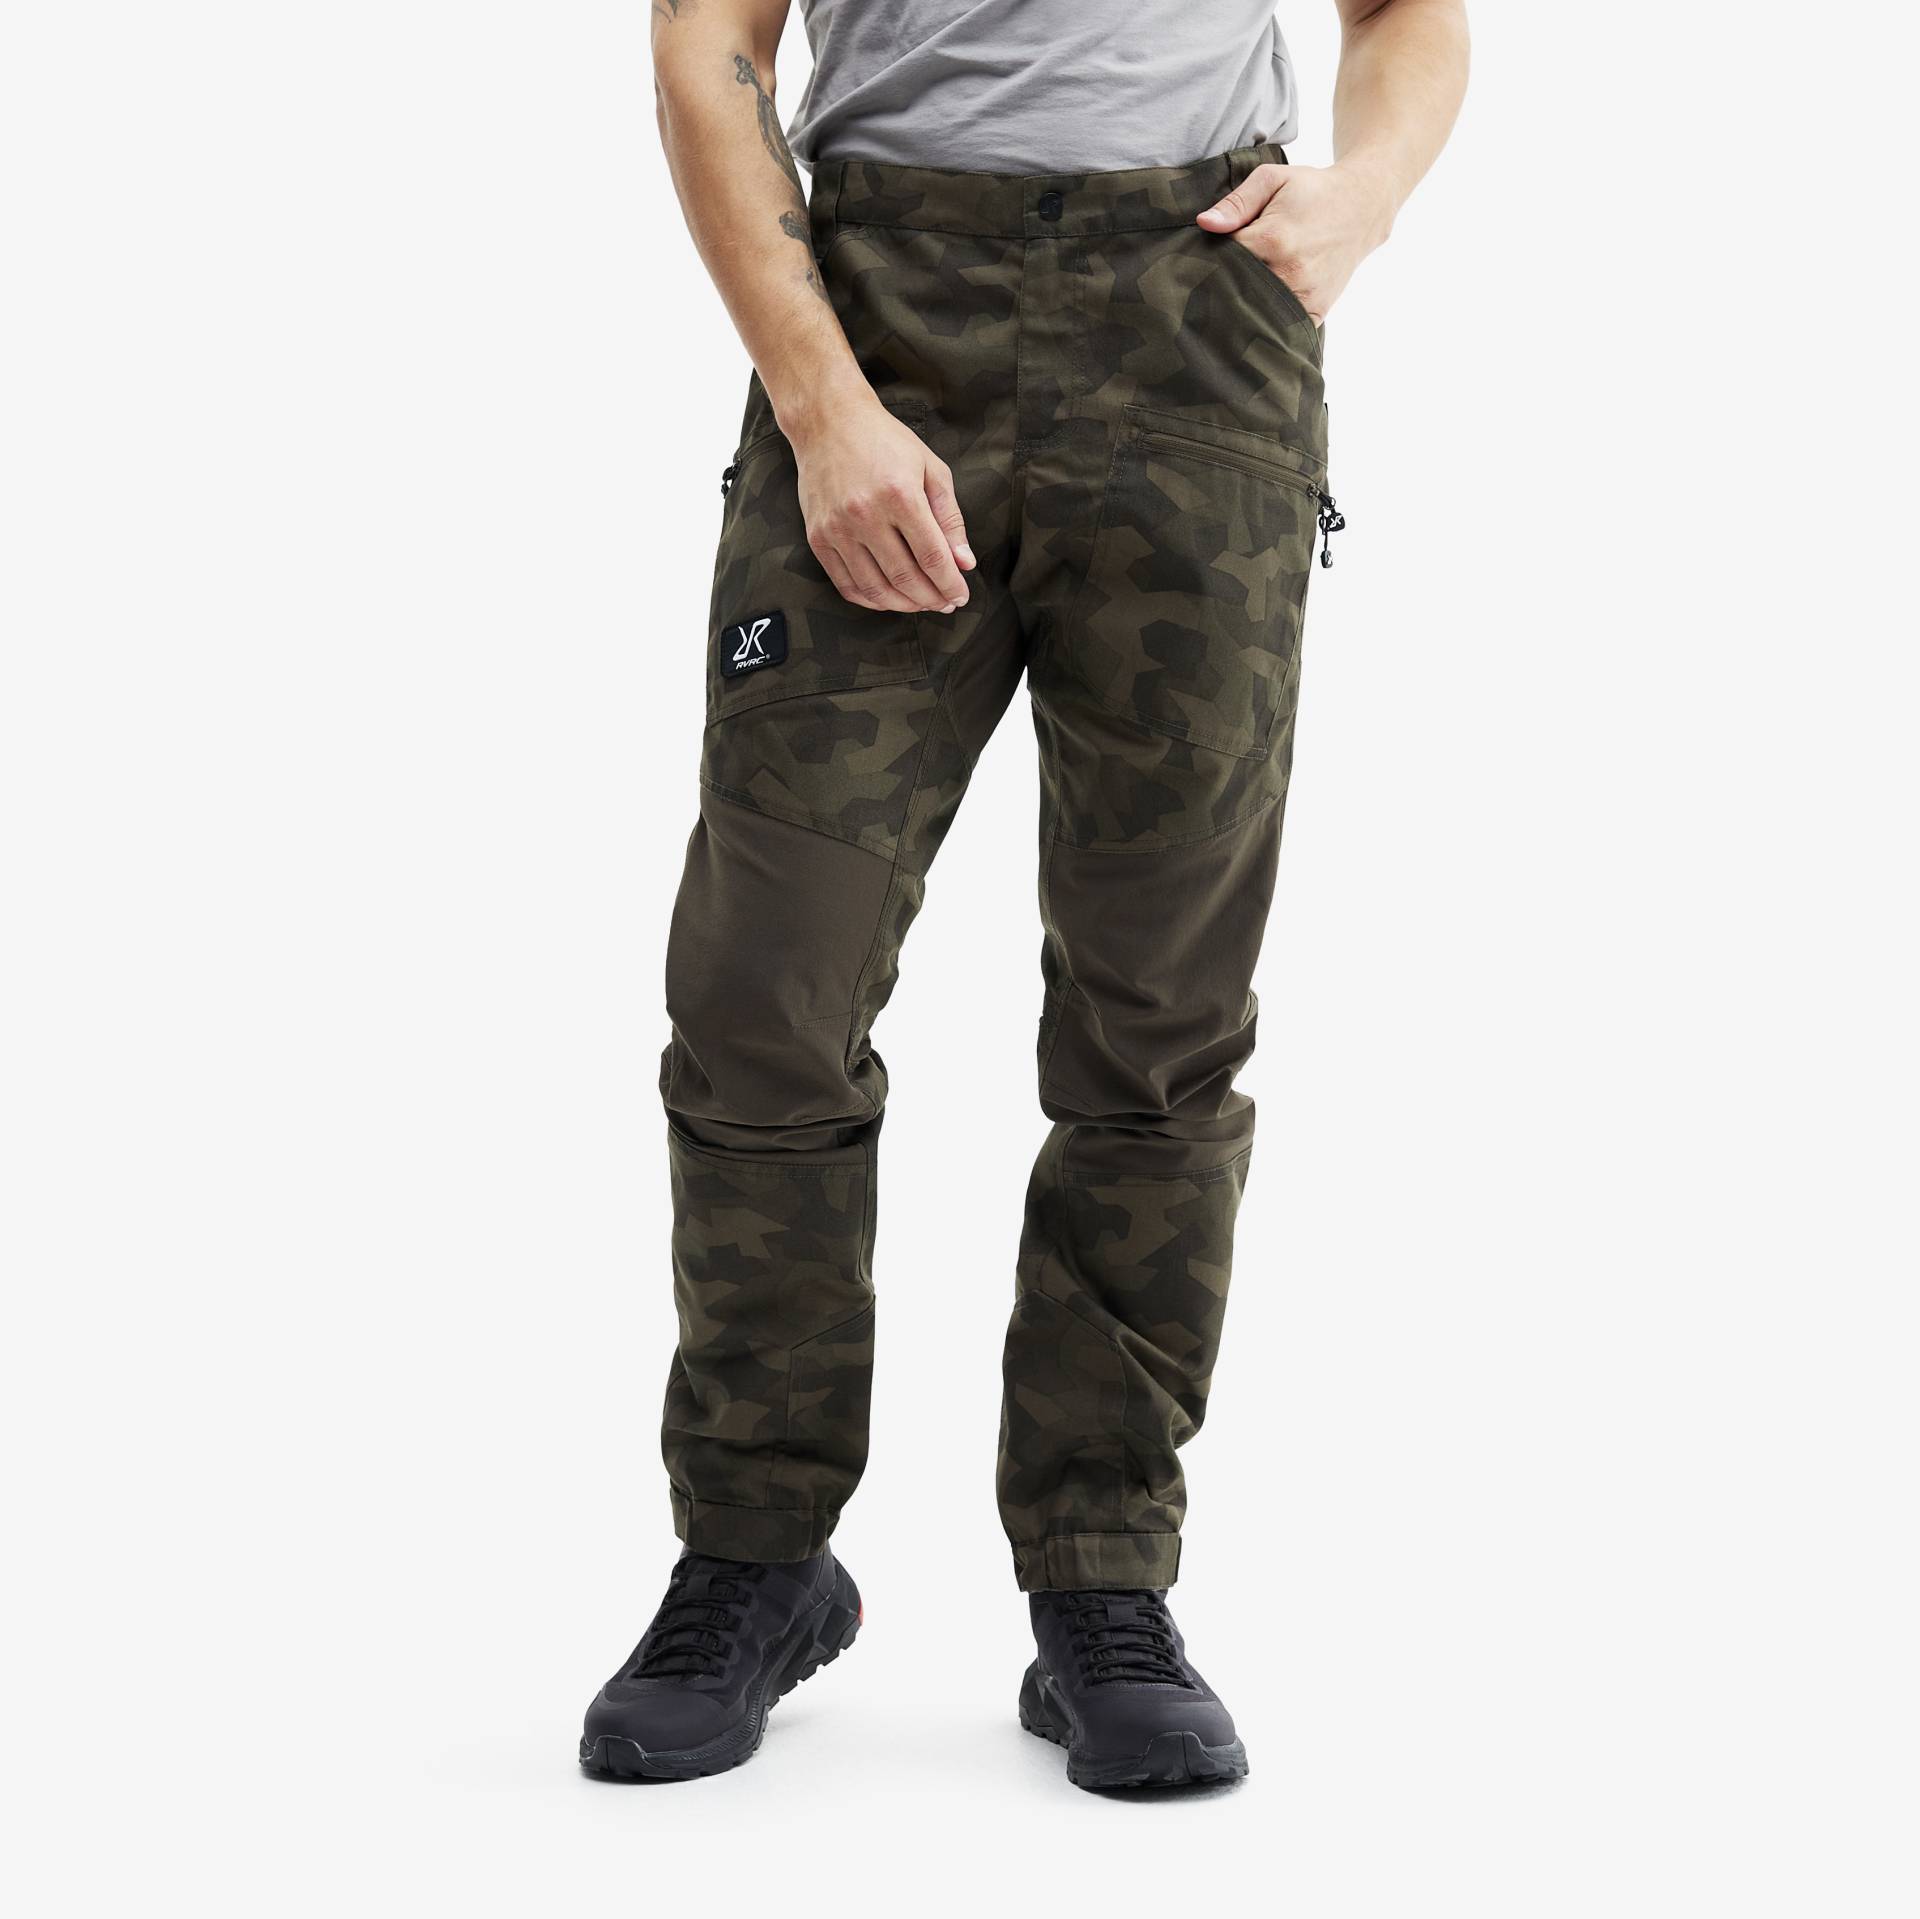 Nordwand Pro Pants Herren Earth Camo, Größe:XL - Outdoorhose, Wanderhose & Trekkinghose von RevolutionRace